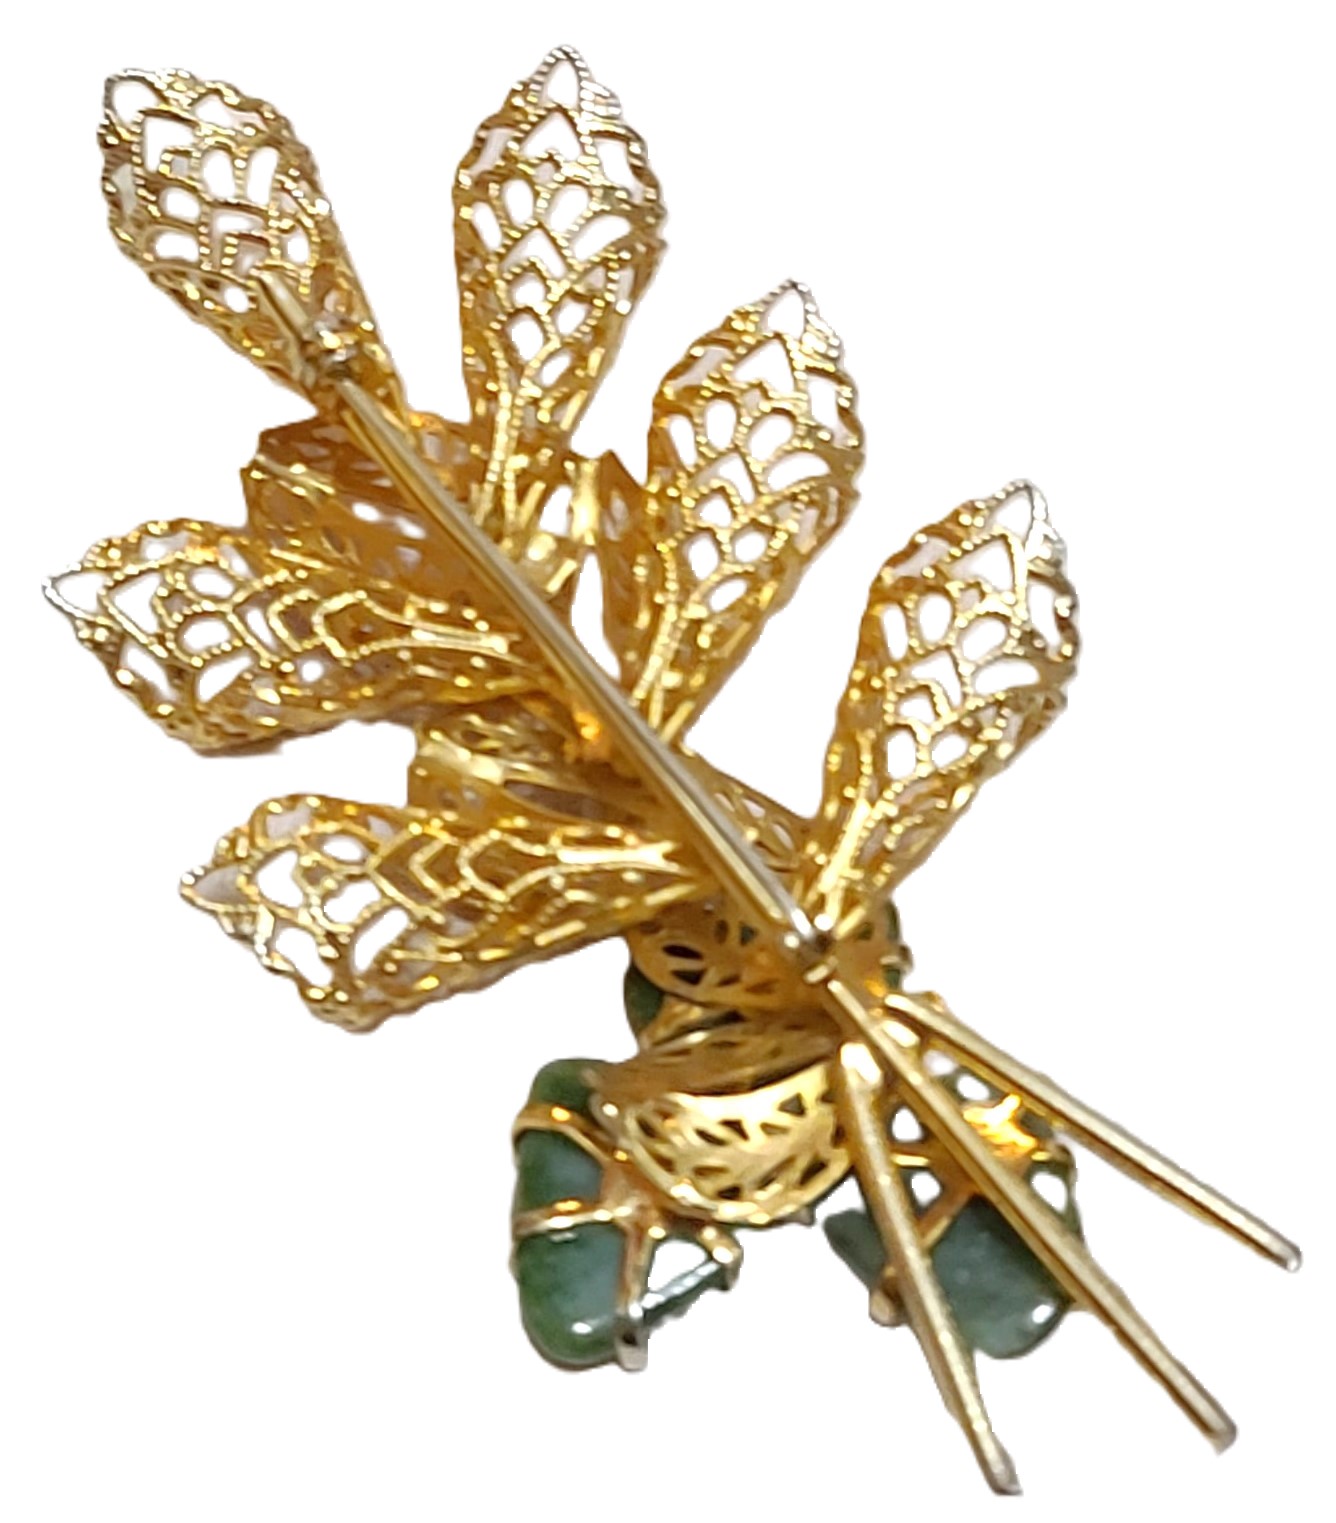 Vintage jade shamrock pin, 3 leaf clover pin, jade gemstone, pin size 4 1/2 inches long